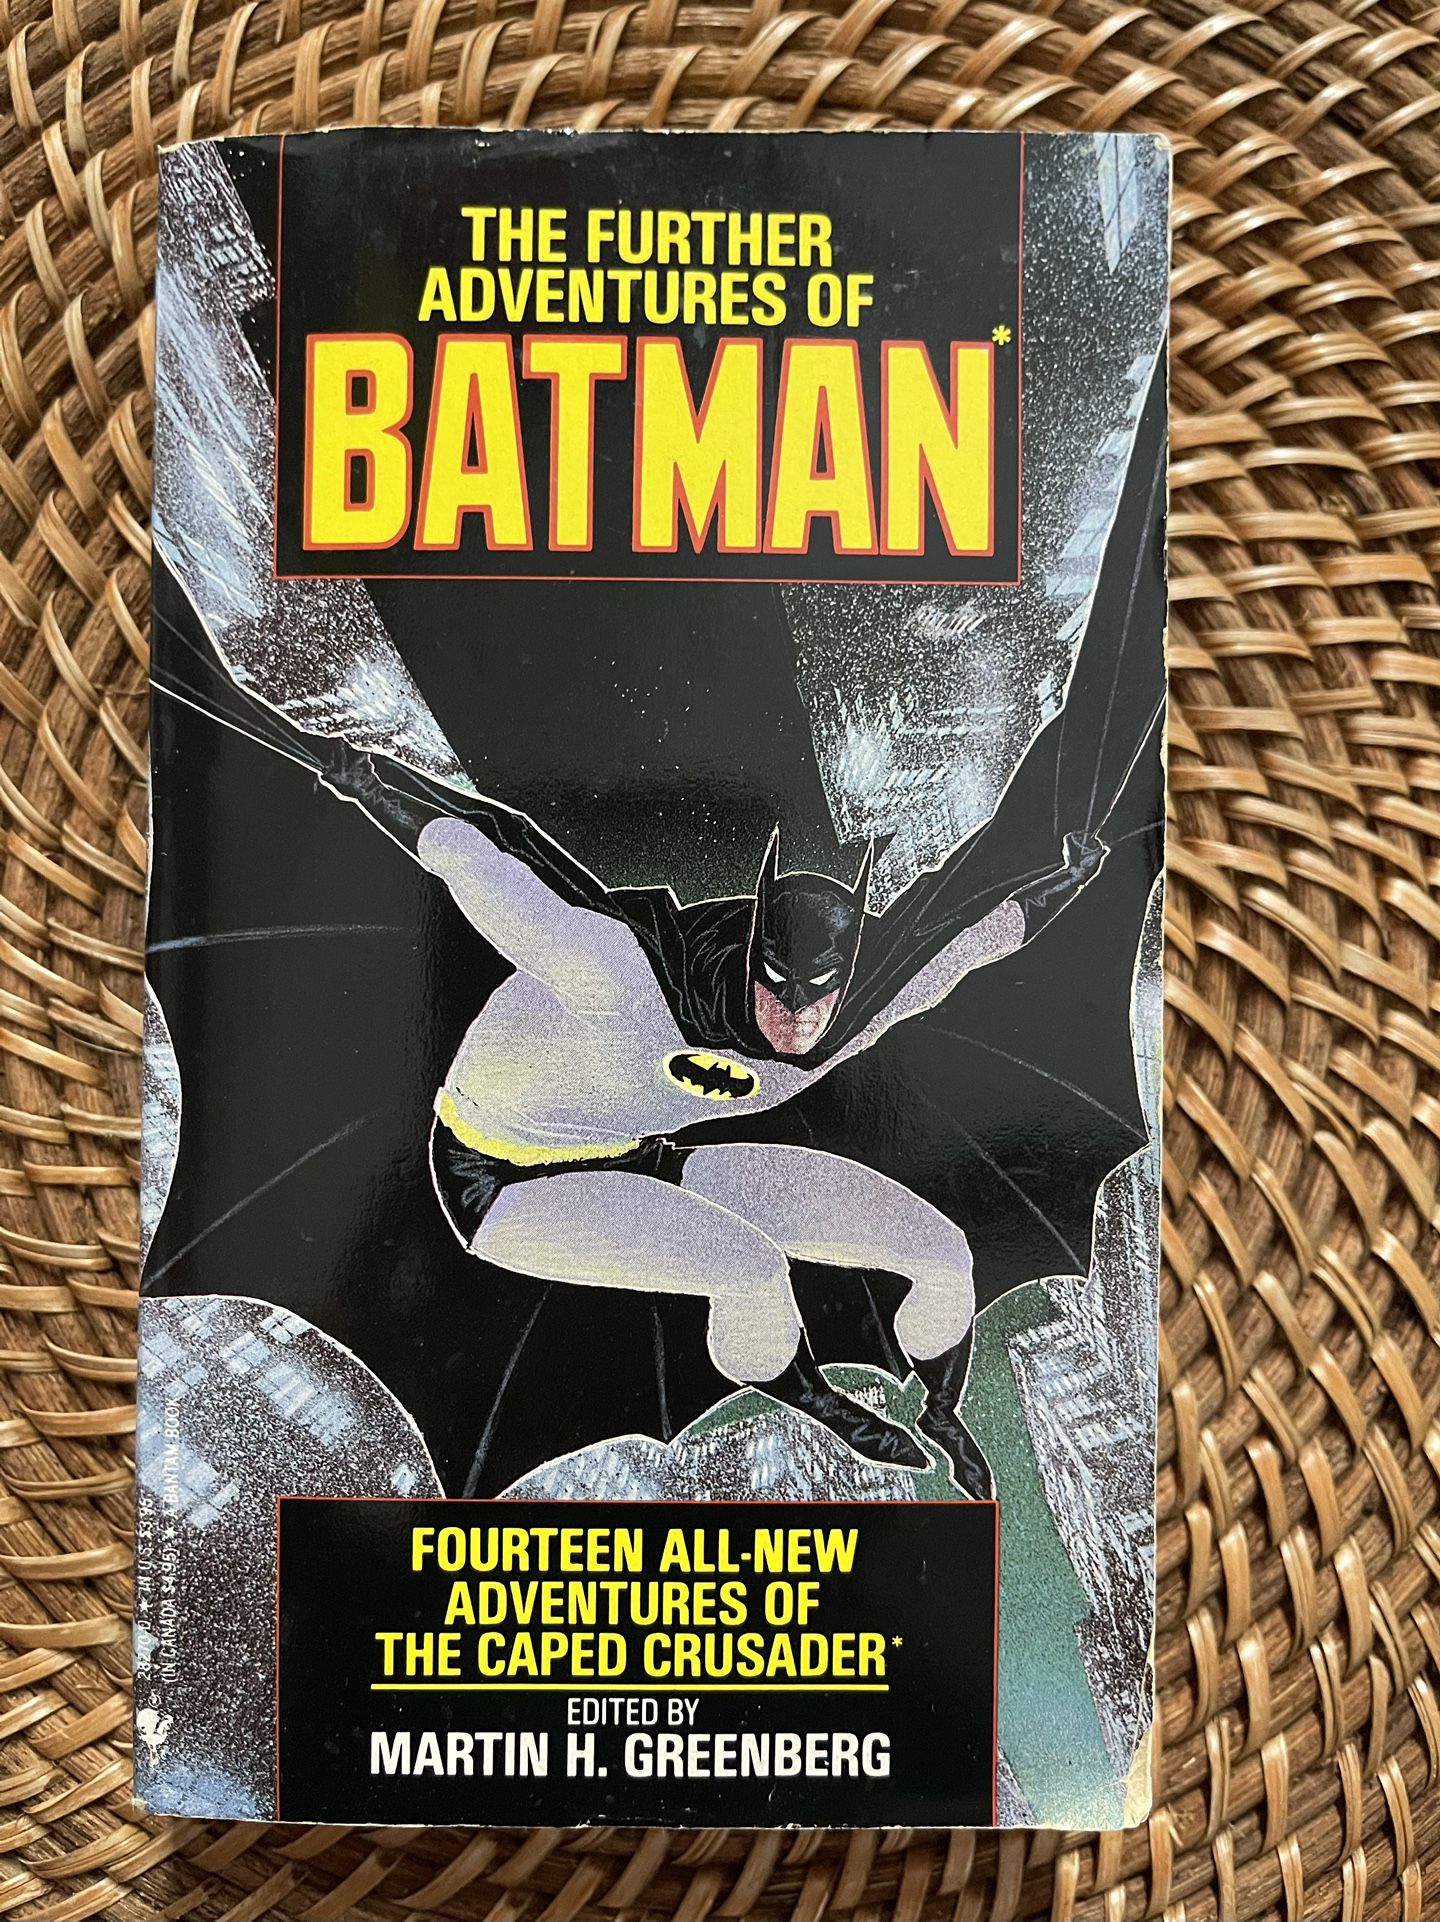 Batman 1989 The Further Adventures of Batman Paperback 1st Edition Martin H. Greenberg